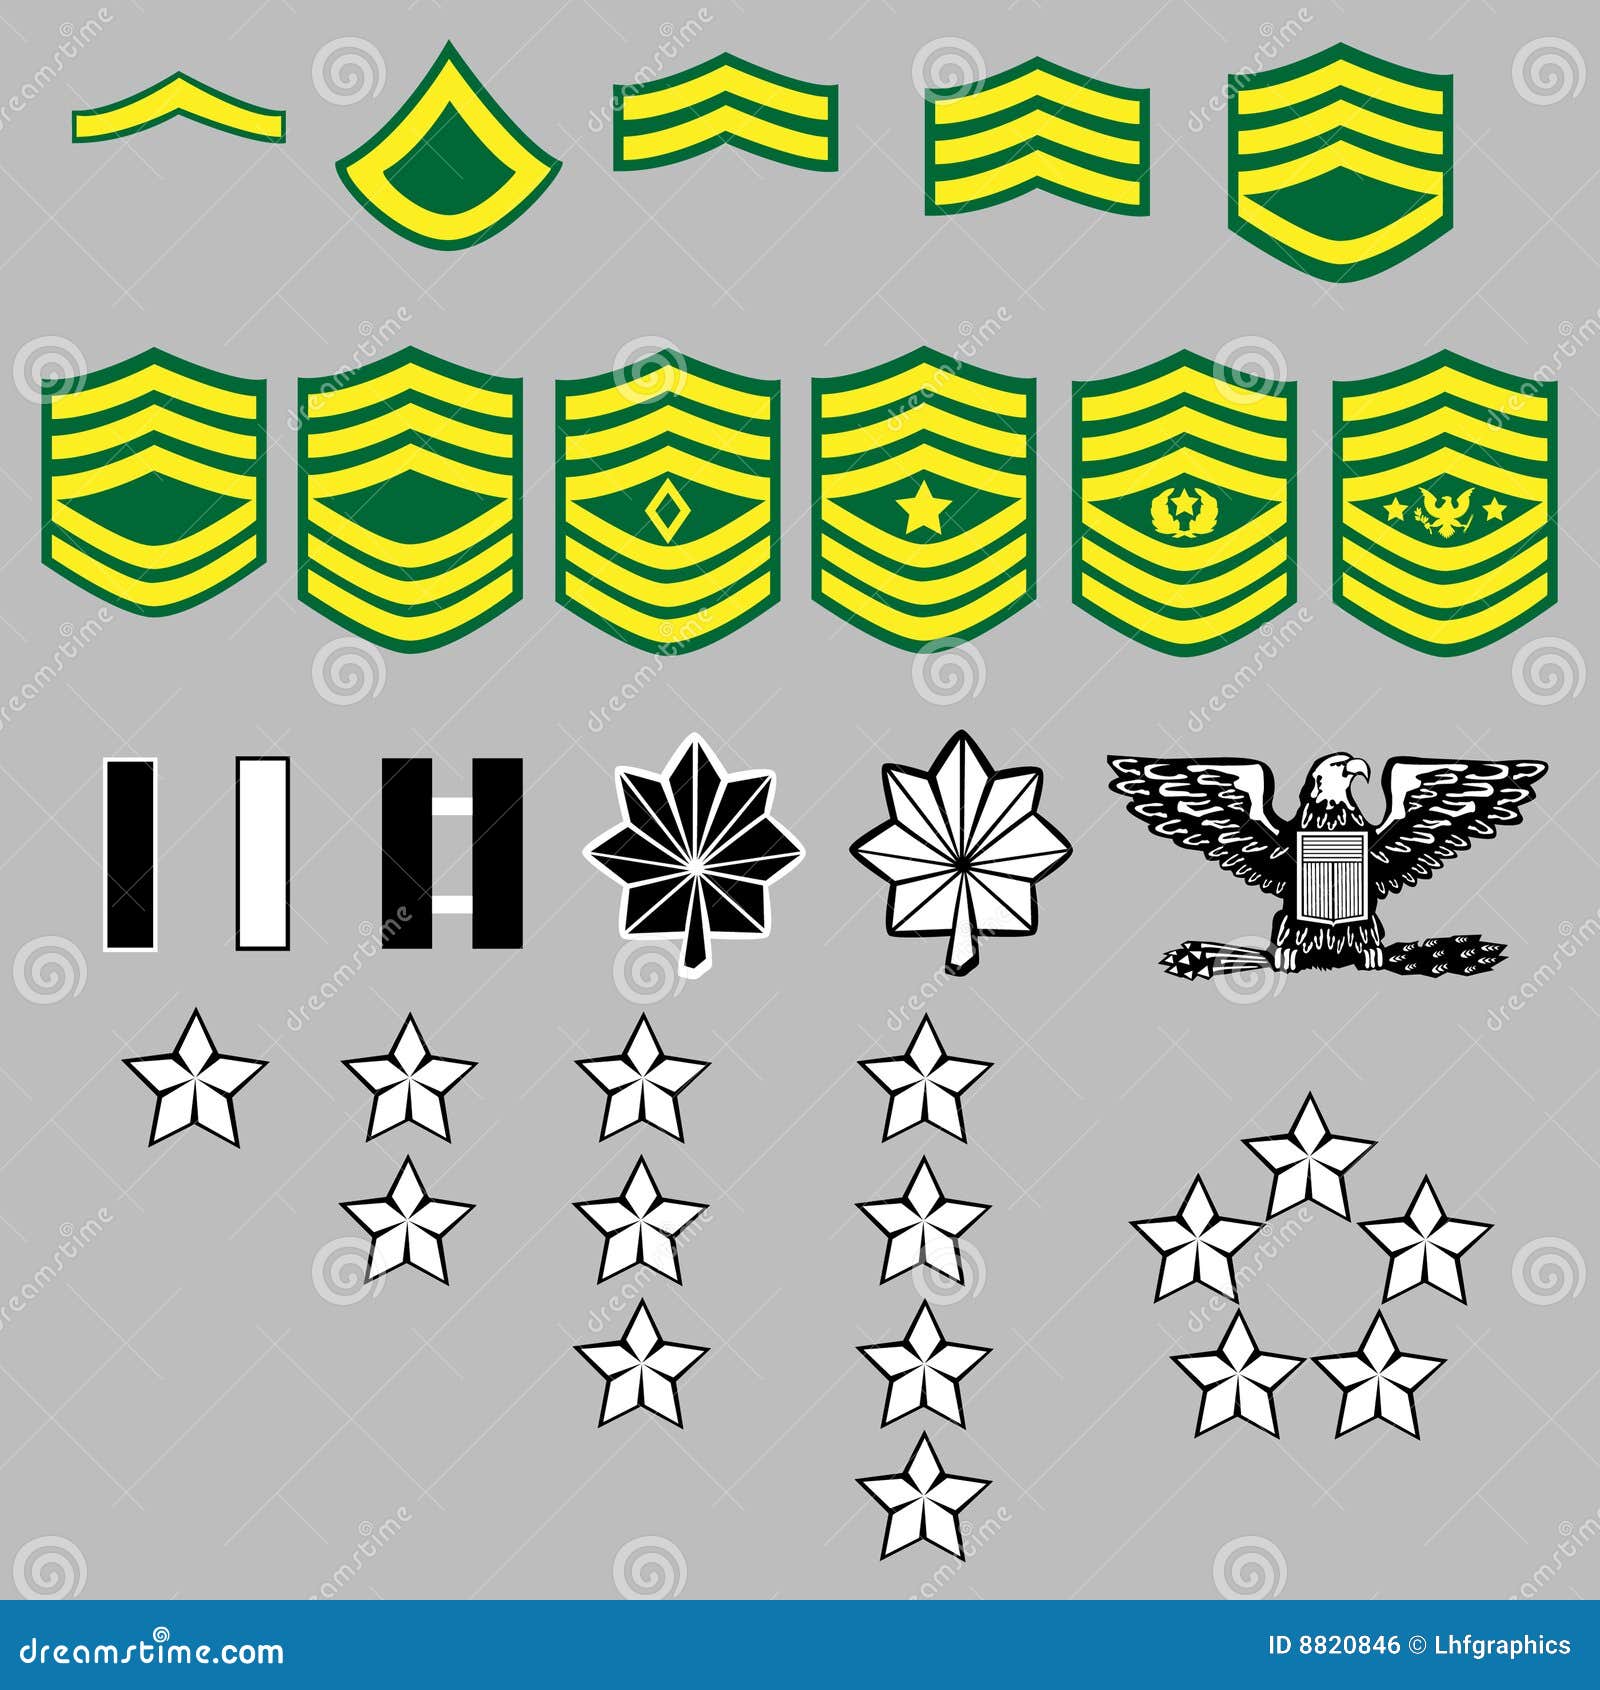 us army rank insignia